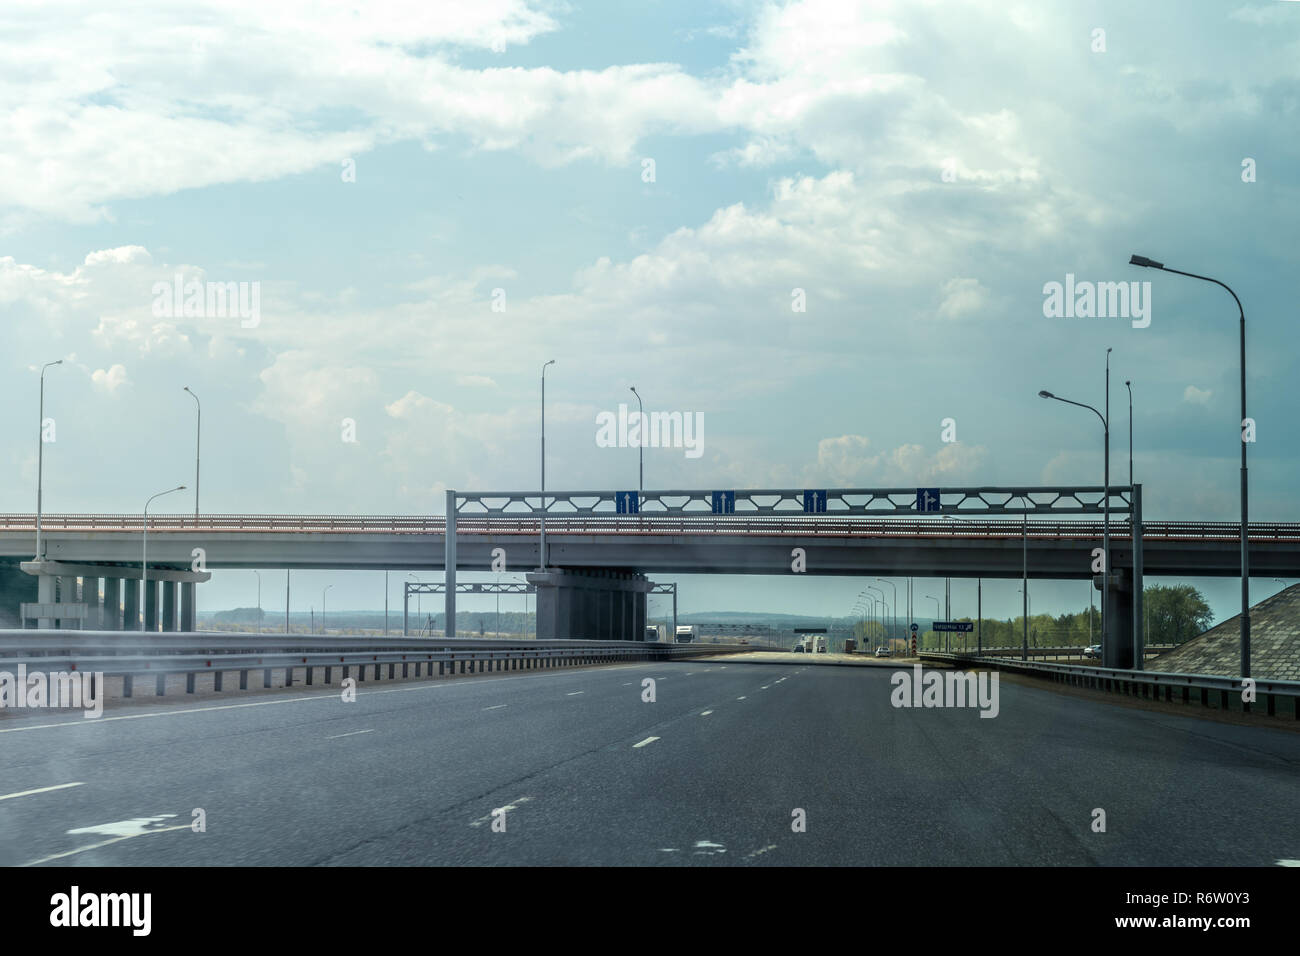 A modern highway, avtstrada with an overpass bridge under the blue sky Stock Photo